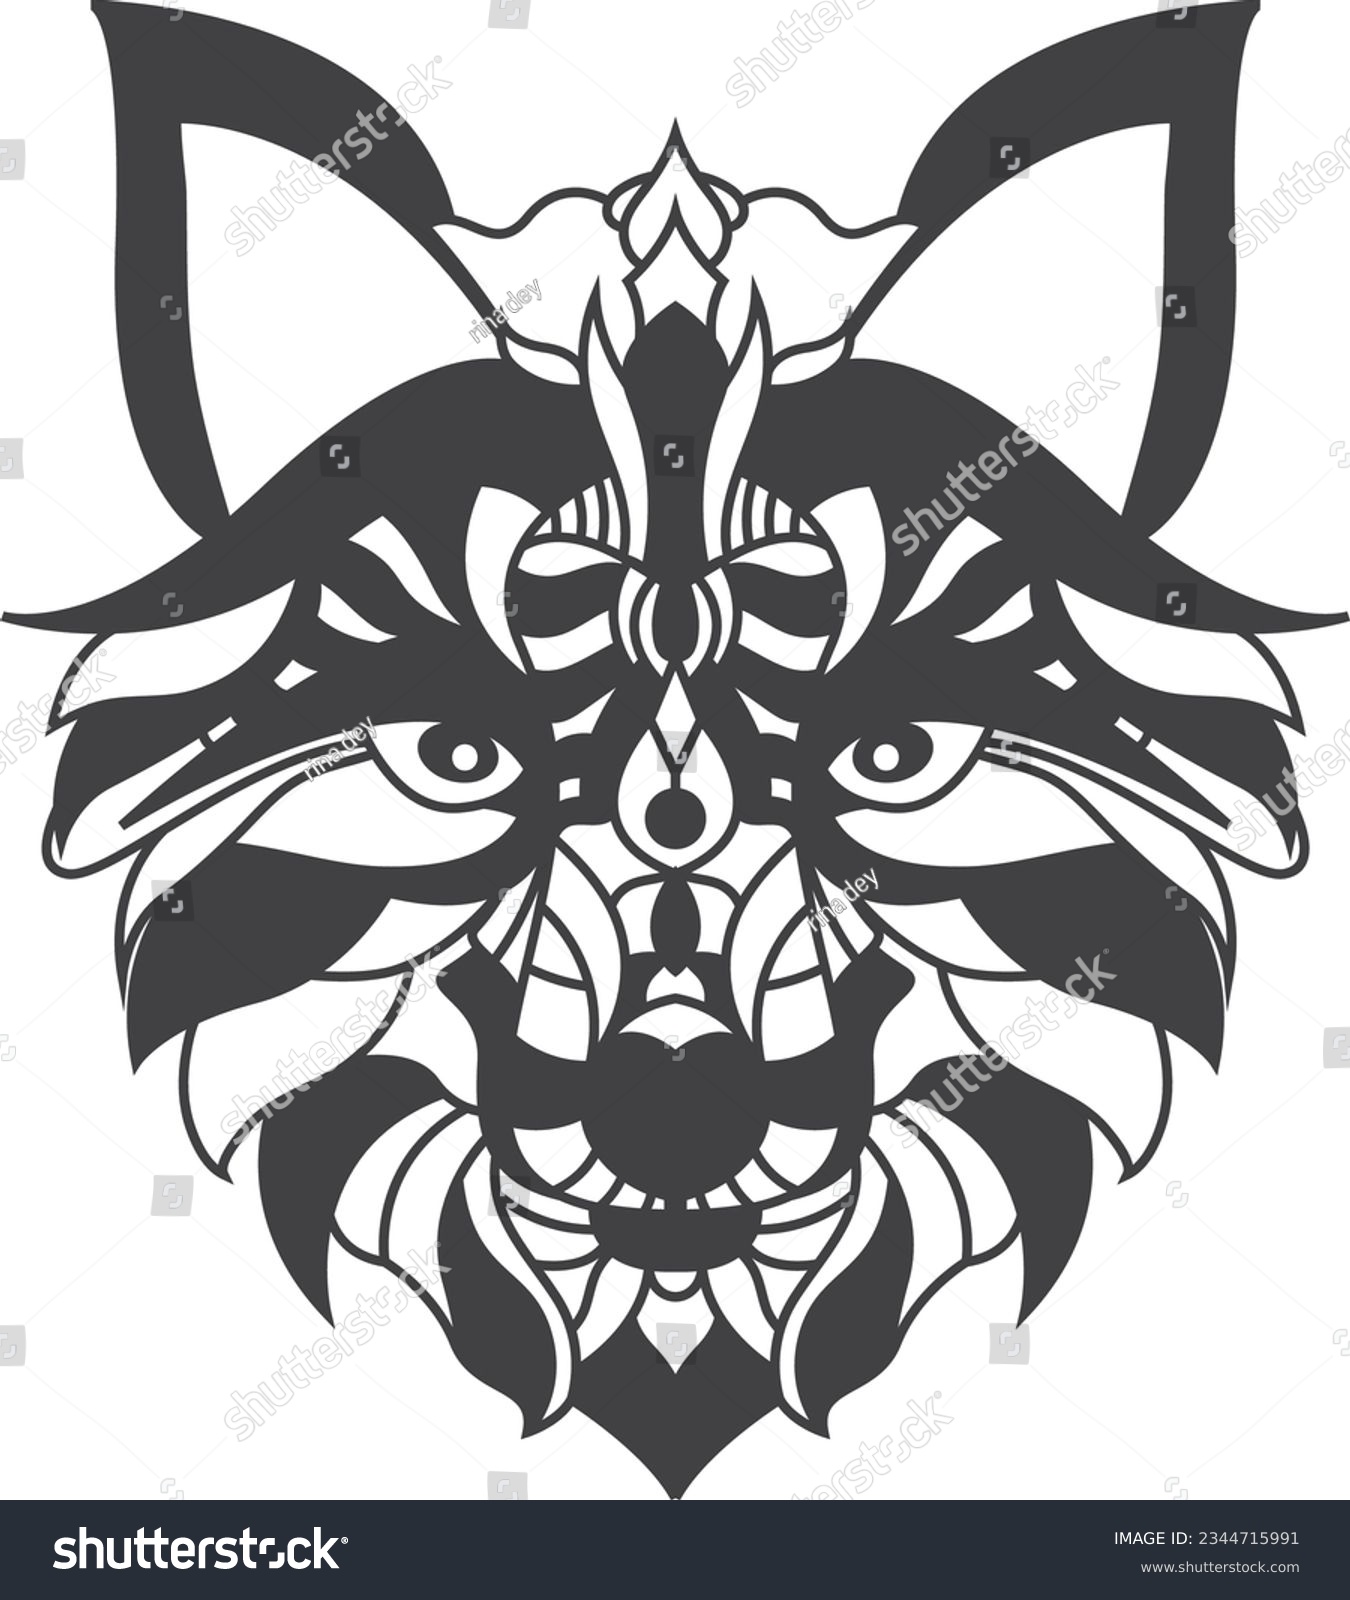 SVG of Wolf Mandala Coloring Page Enchanting Wolf Mandala: Unleash Your Creativity Through Coloring svg